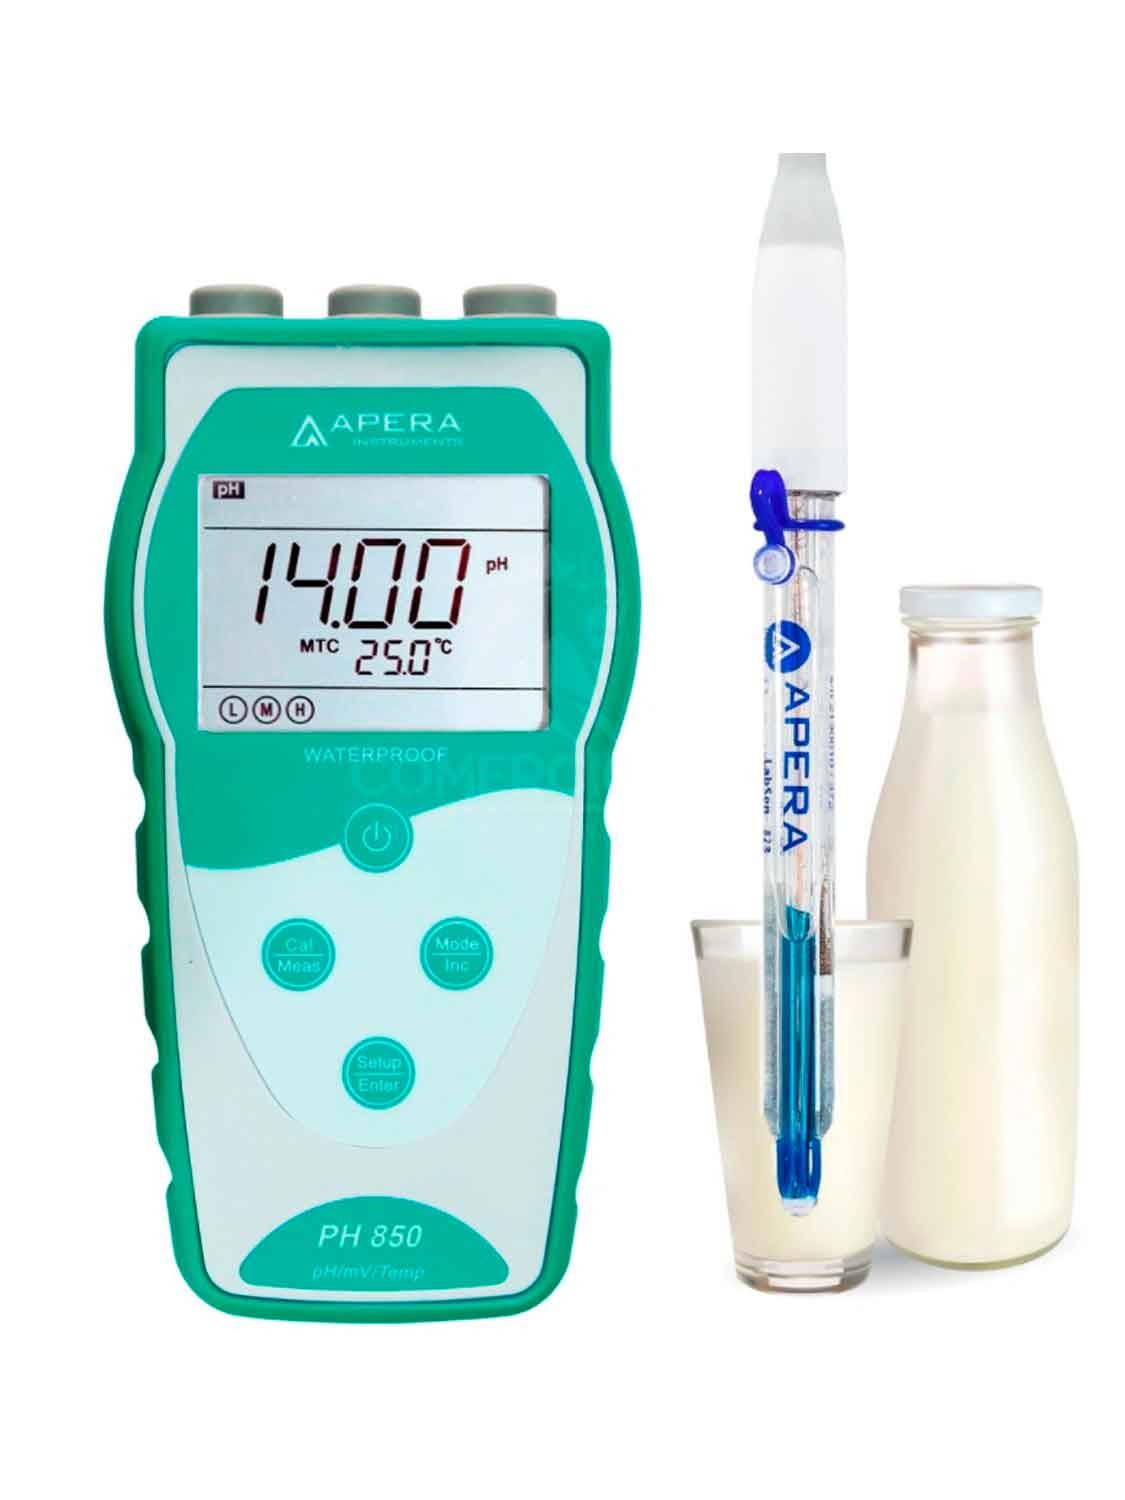 Medidor de pH con electrodo de pH y baterías, probador de pH para agua,  leche, queso, tierra, alimentos